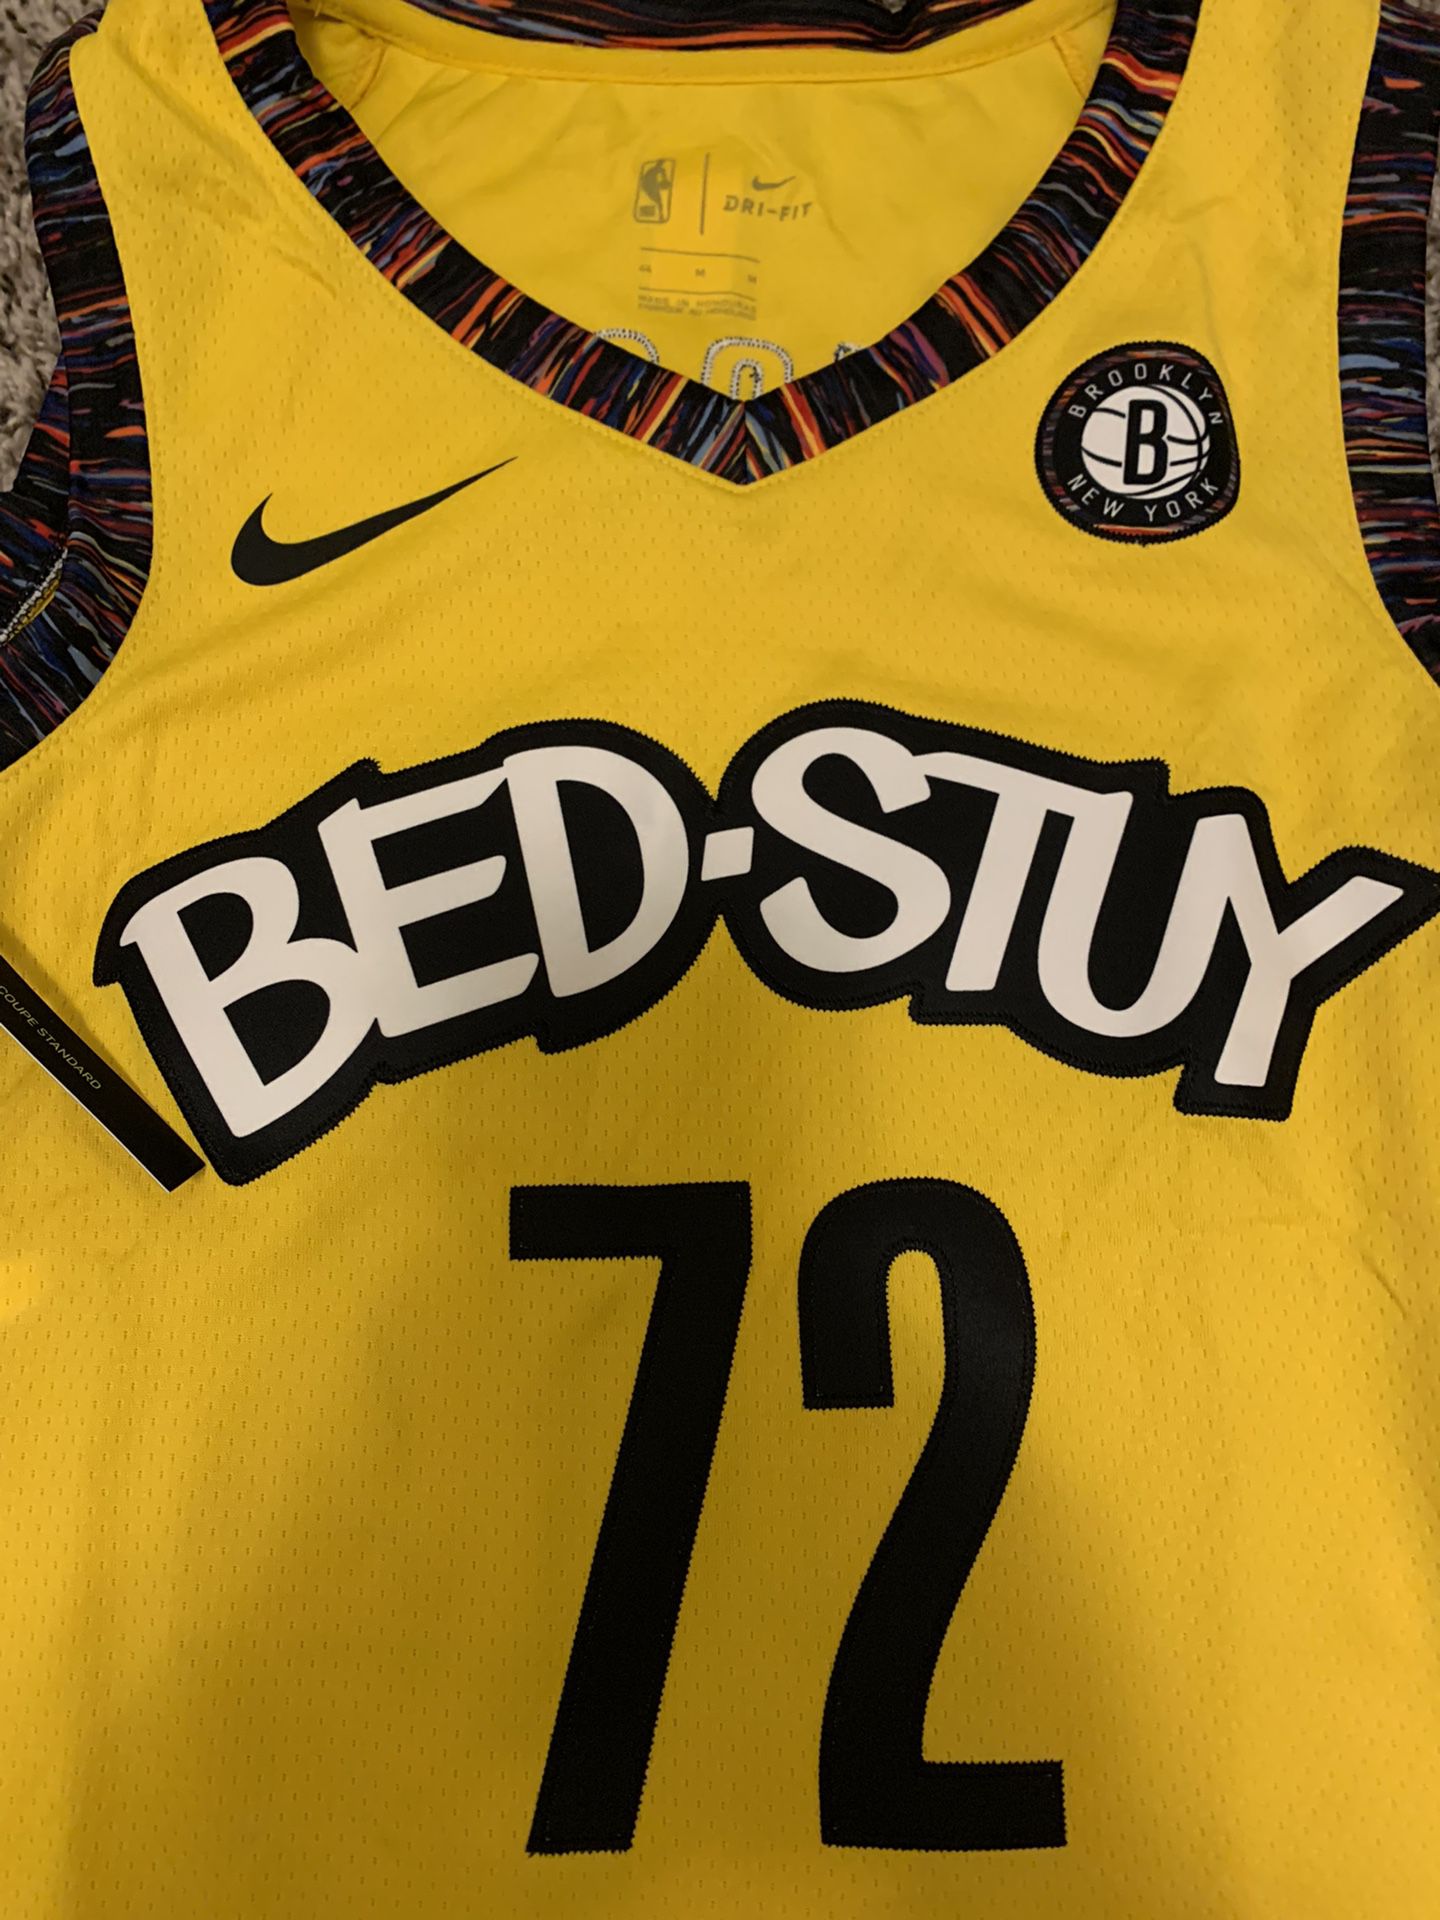 Nets release new 'Bed-Stuy' Nike City Edition jerseys